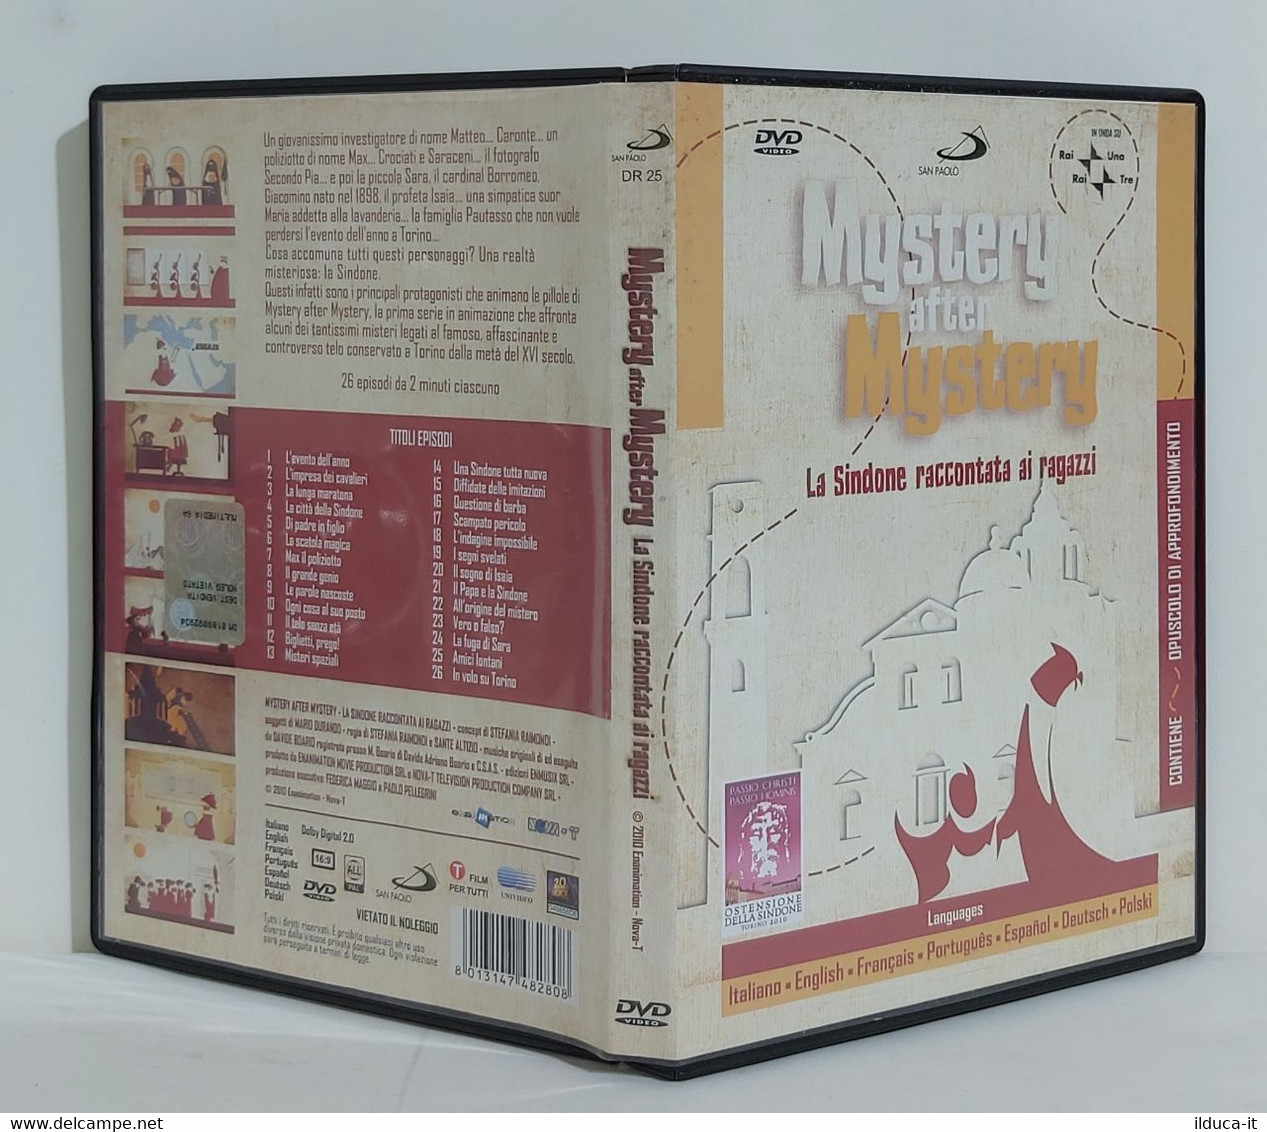 I101828 DVD - Mystery After Mystery - La Sindone Raccontata Ai Ragazzi - Documentaires